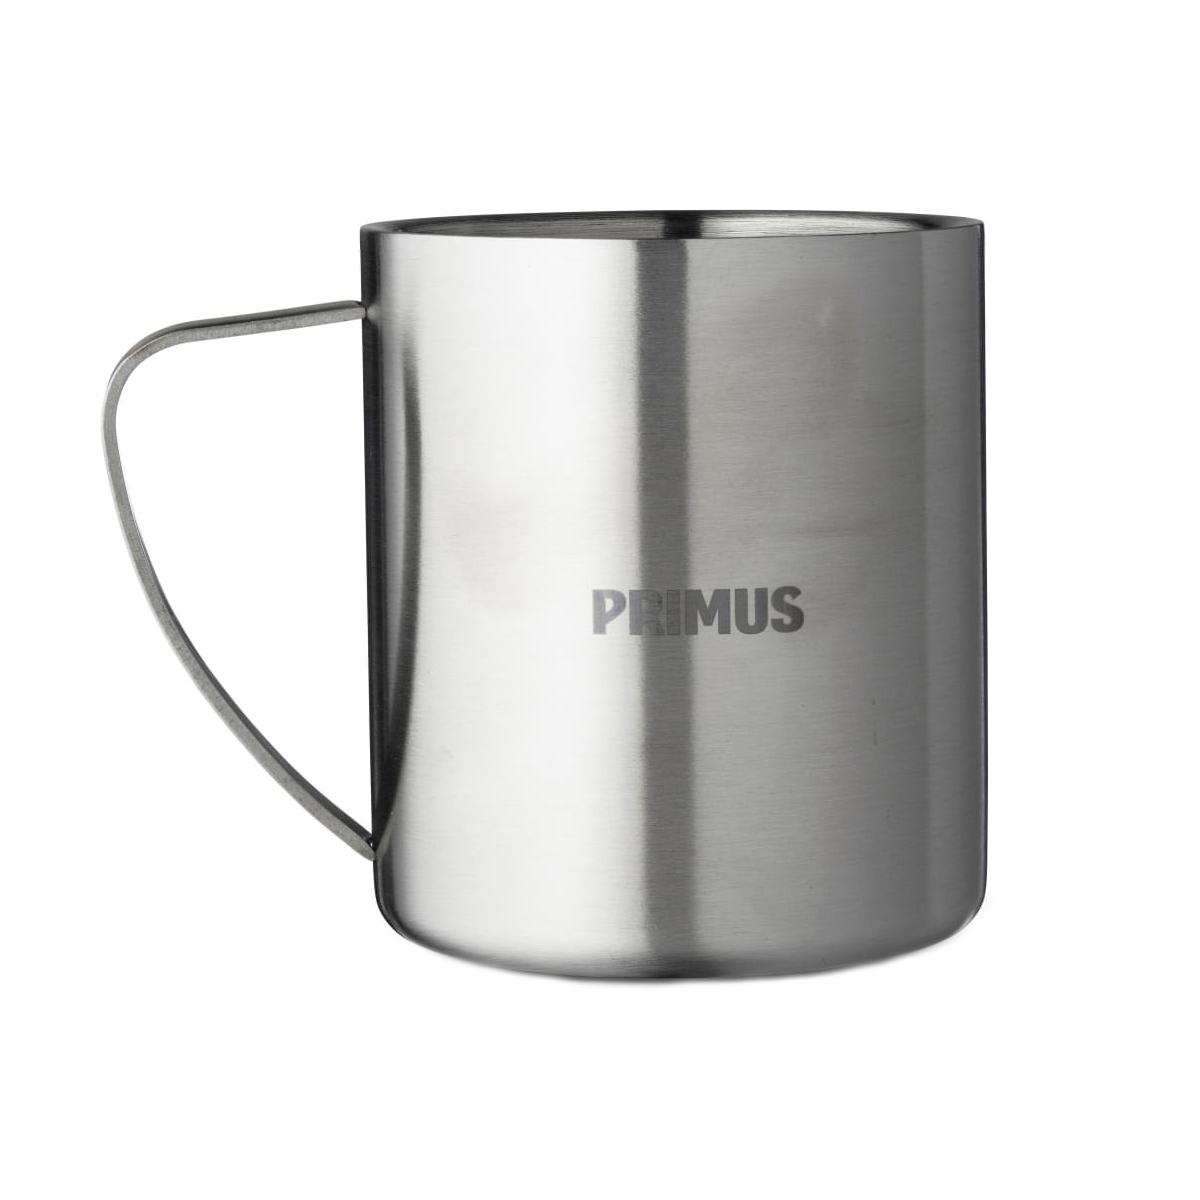 Primus 4-Season Mug 0.2 ltr